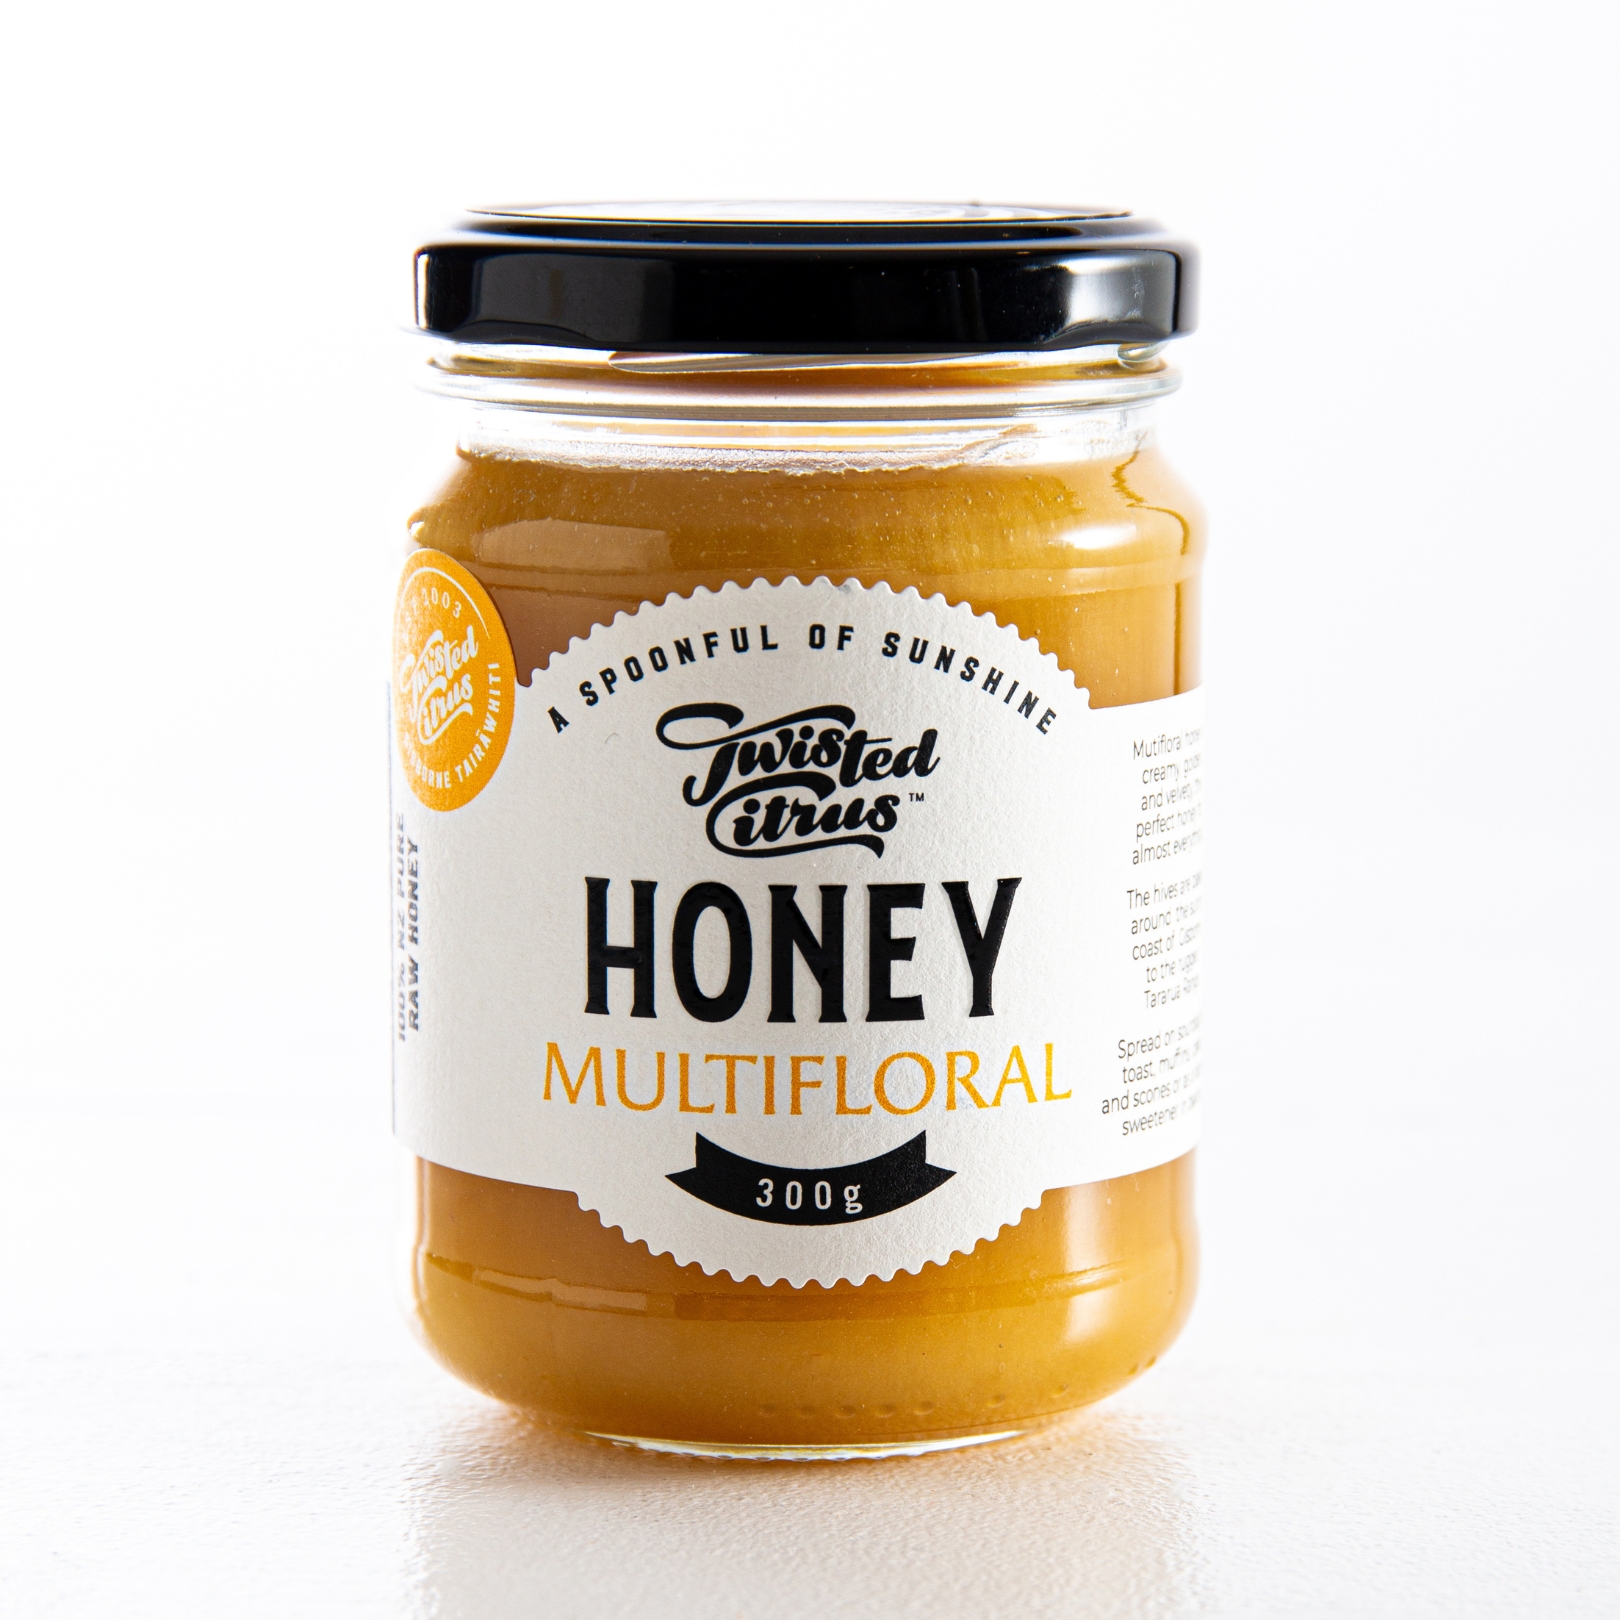 Buy Multifloral Honey Online NZ - Twisted Citrus